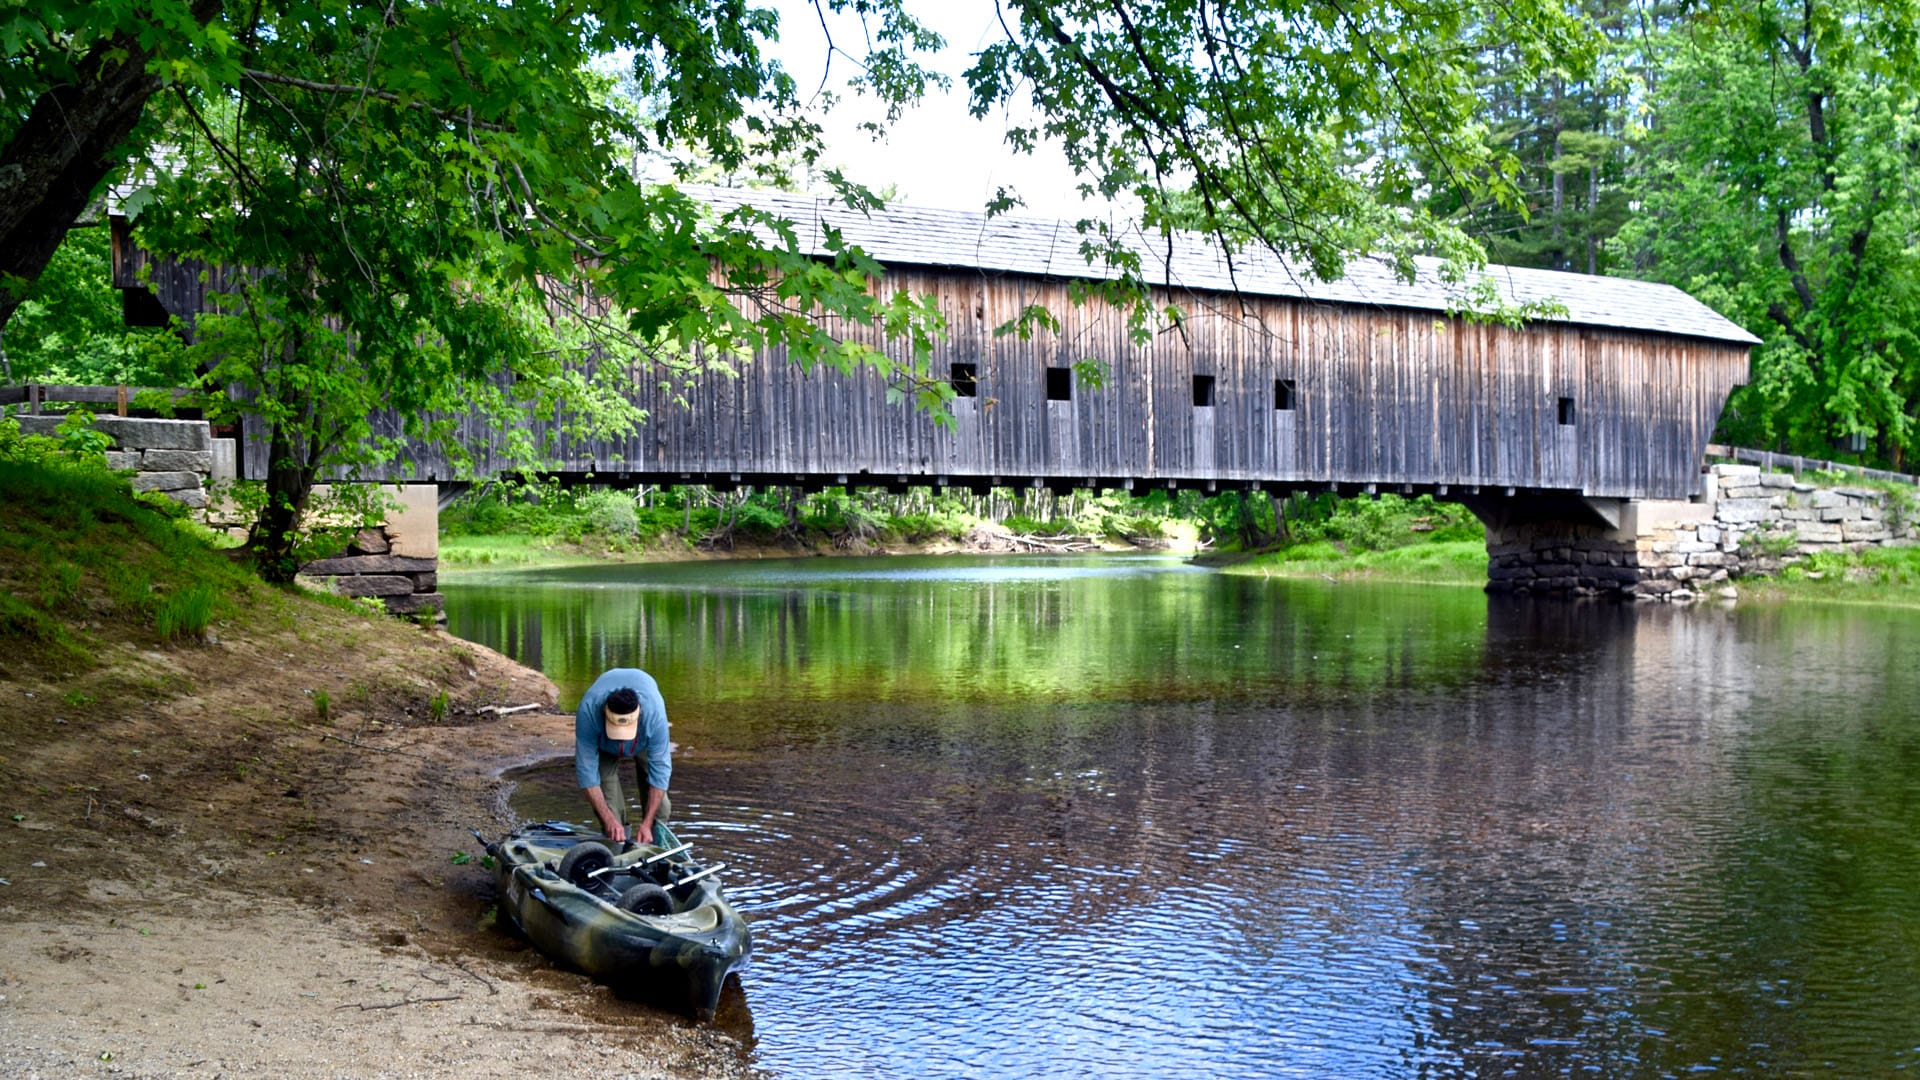 The Hemlock covered bridge outside of Fryeburg, Maine, was built in 1867.